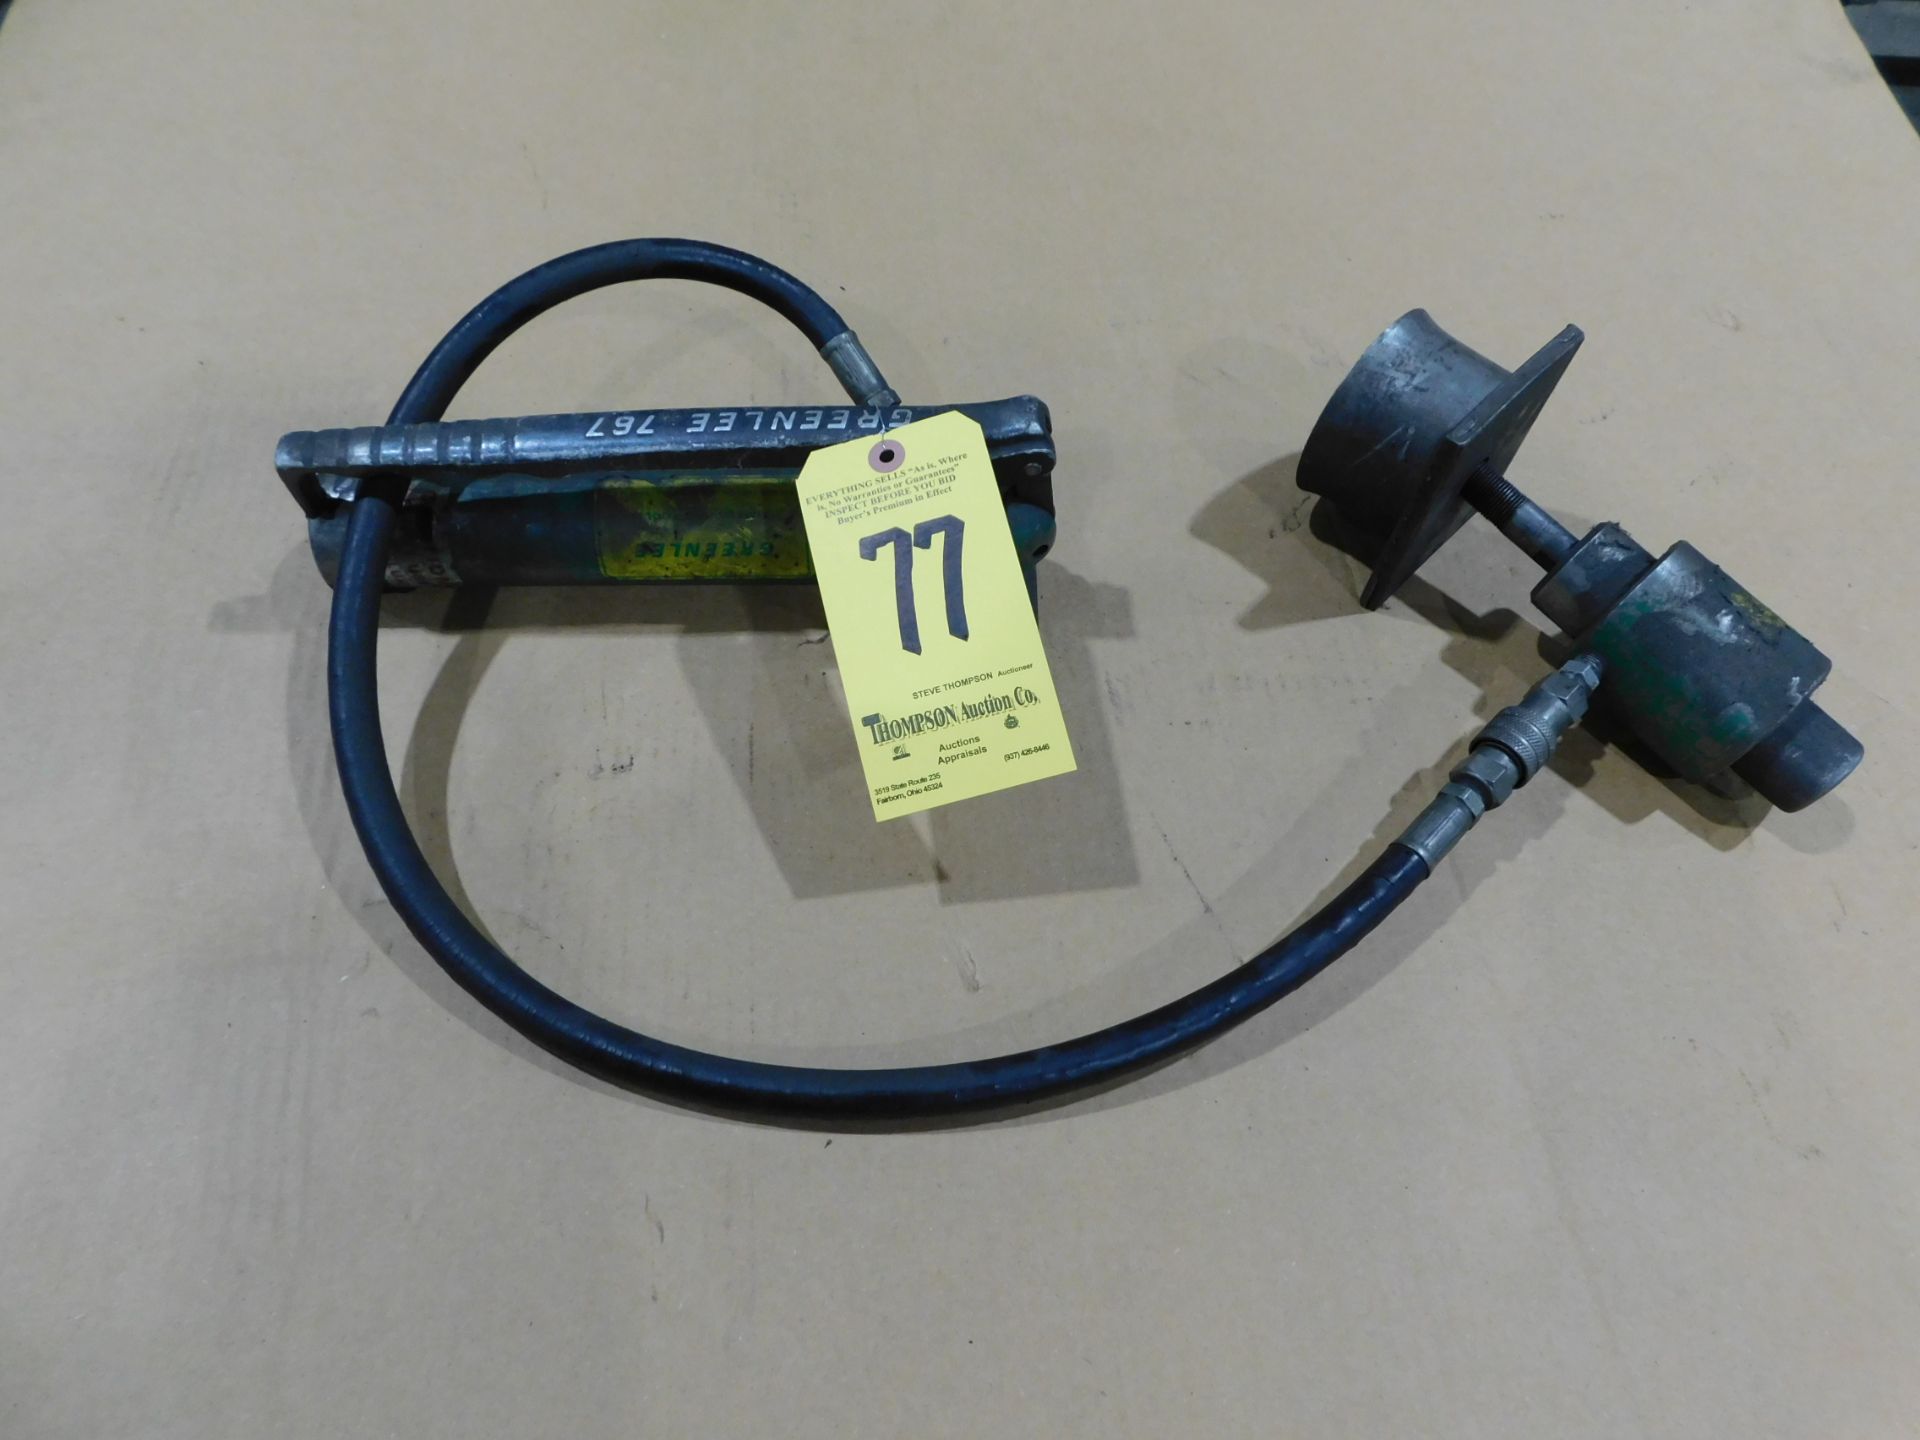 Greenlee 767 Hand Pump with Hydraulic Cylinder